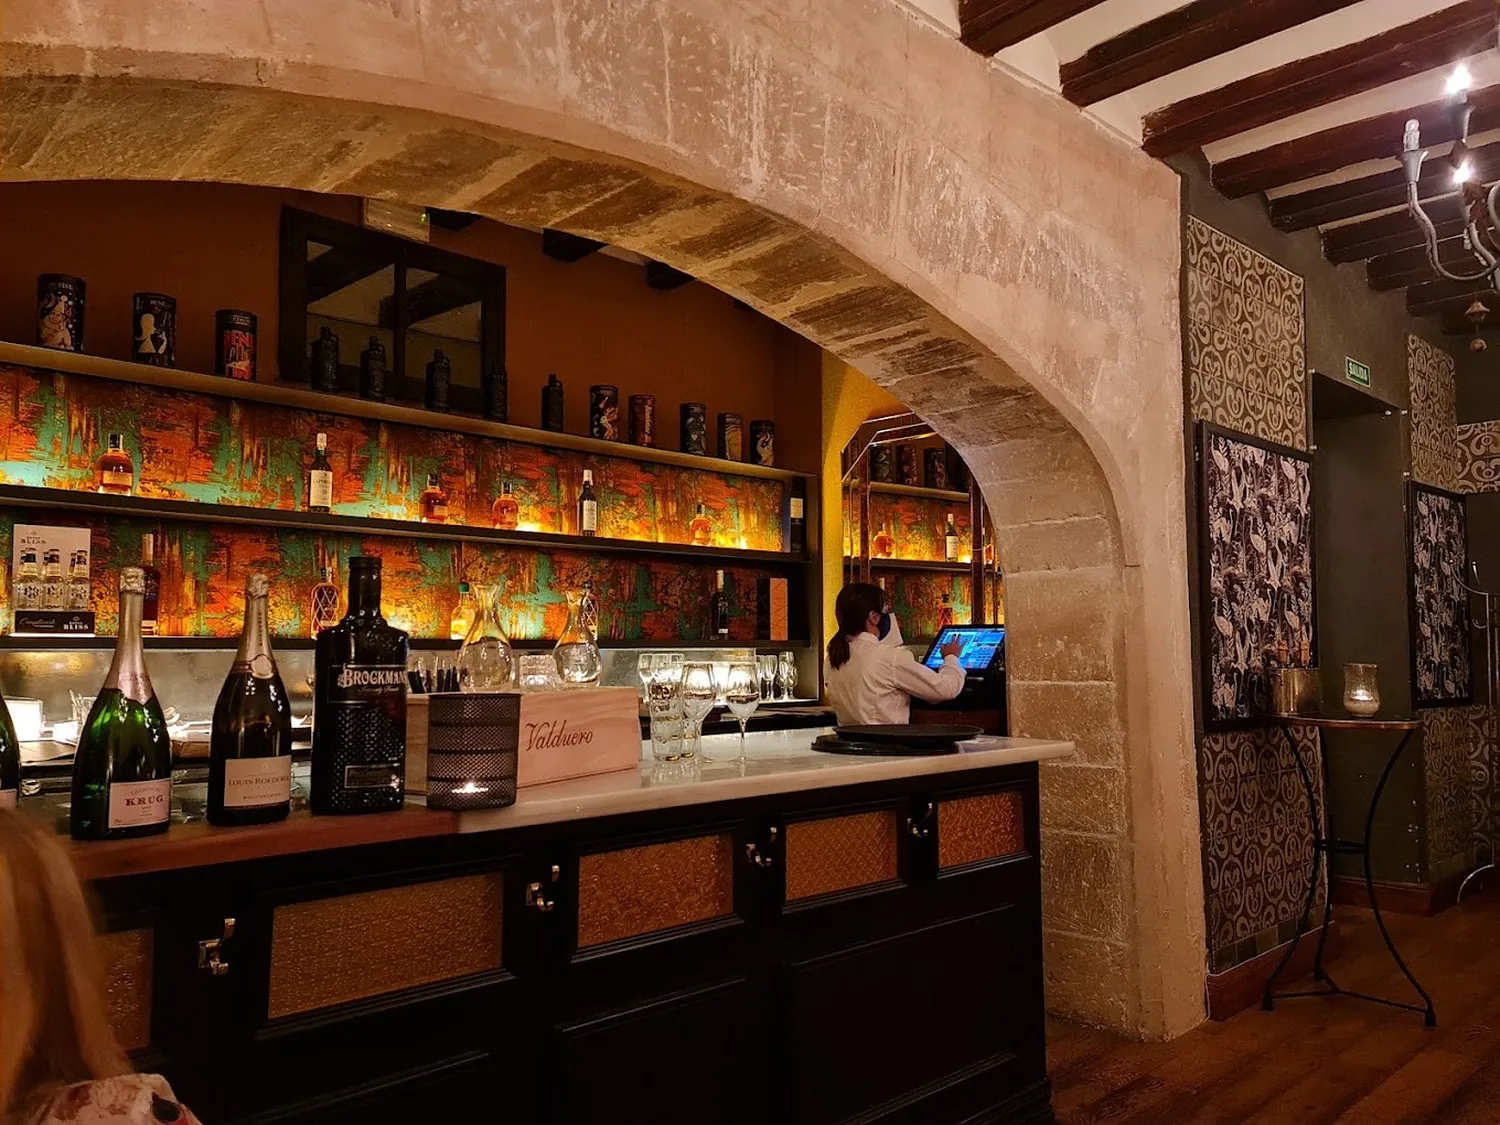 Tast Club restaurant Mallorca